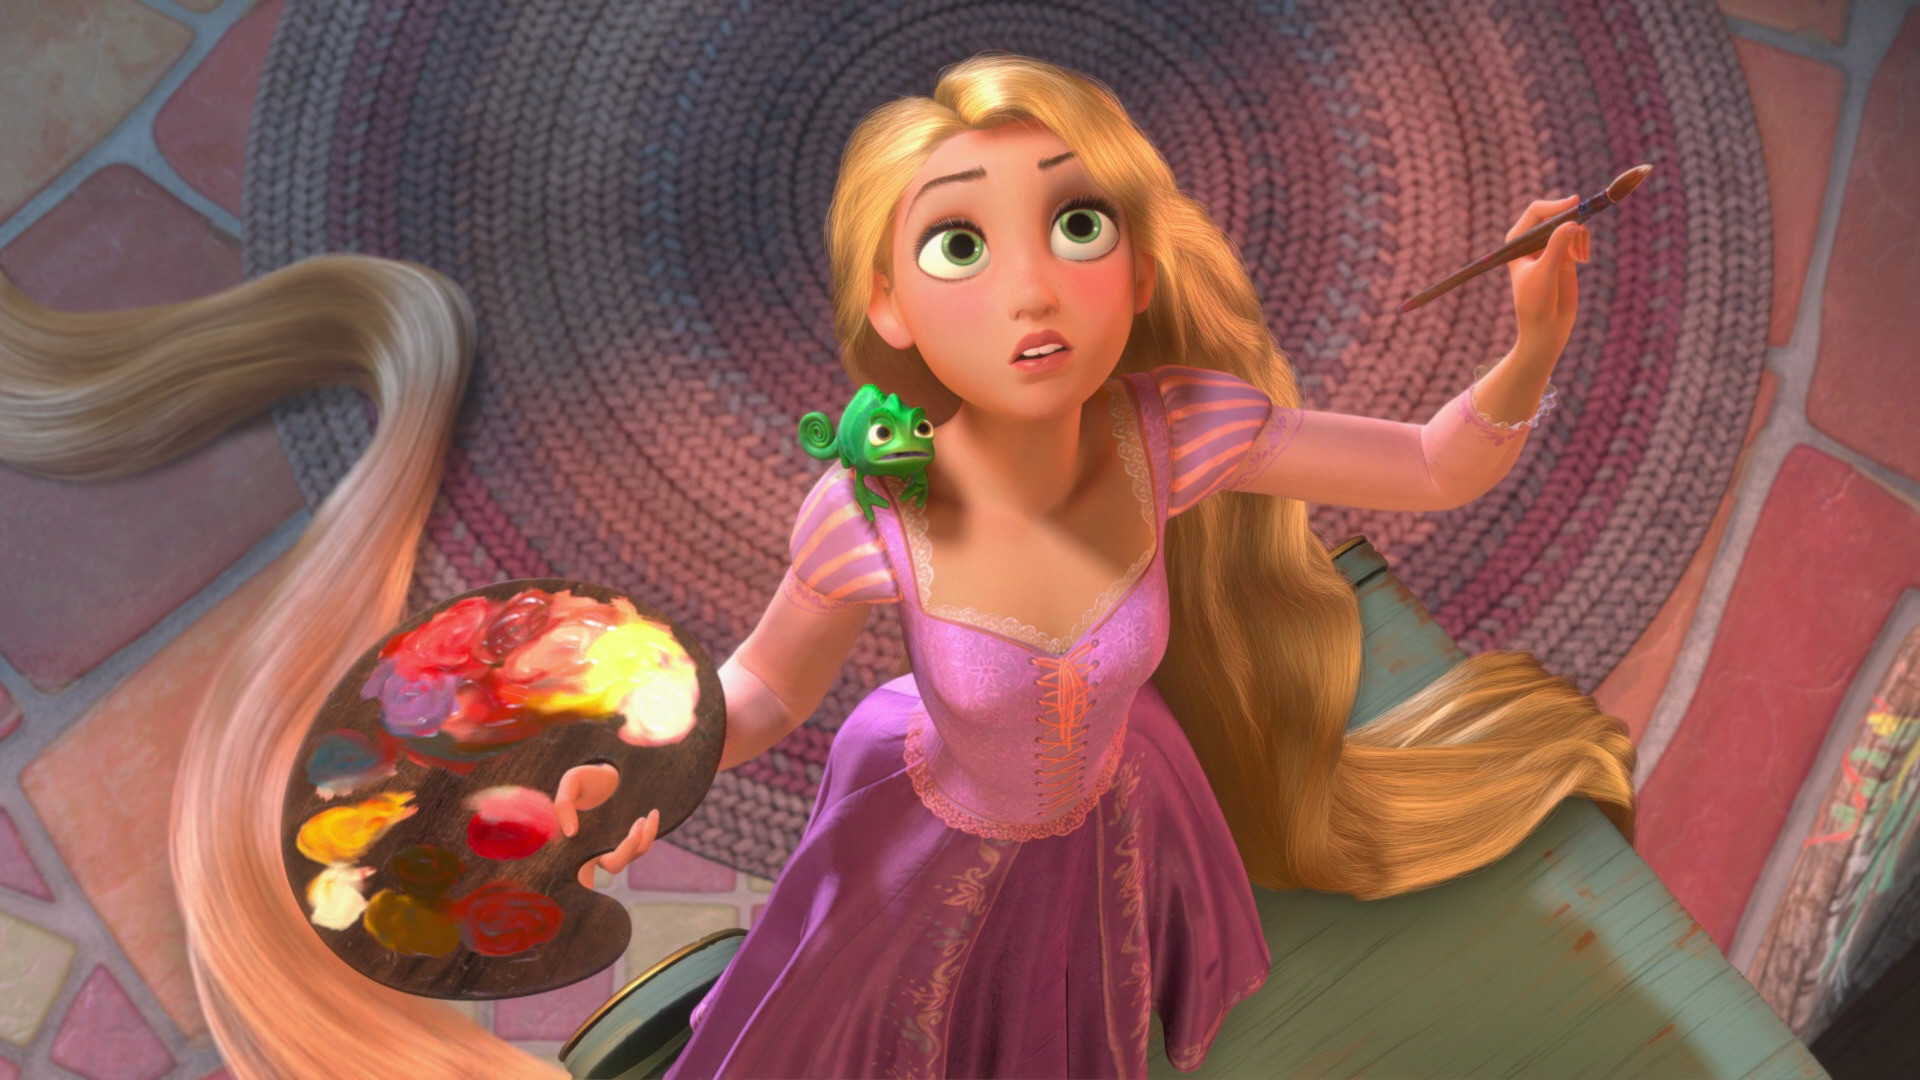 Revival Disney Princesses images Princess Rapunzel HD wallpaper and  background photos